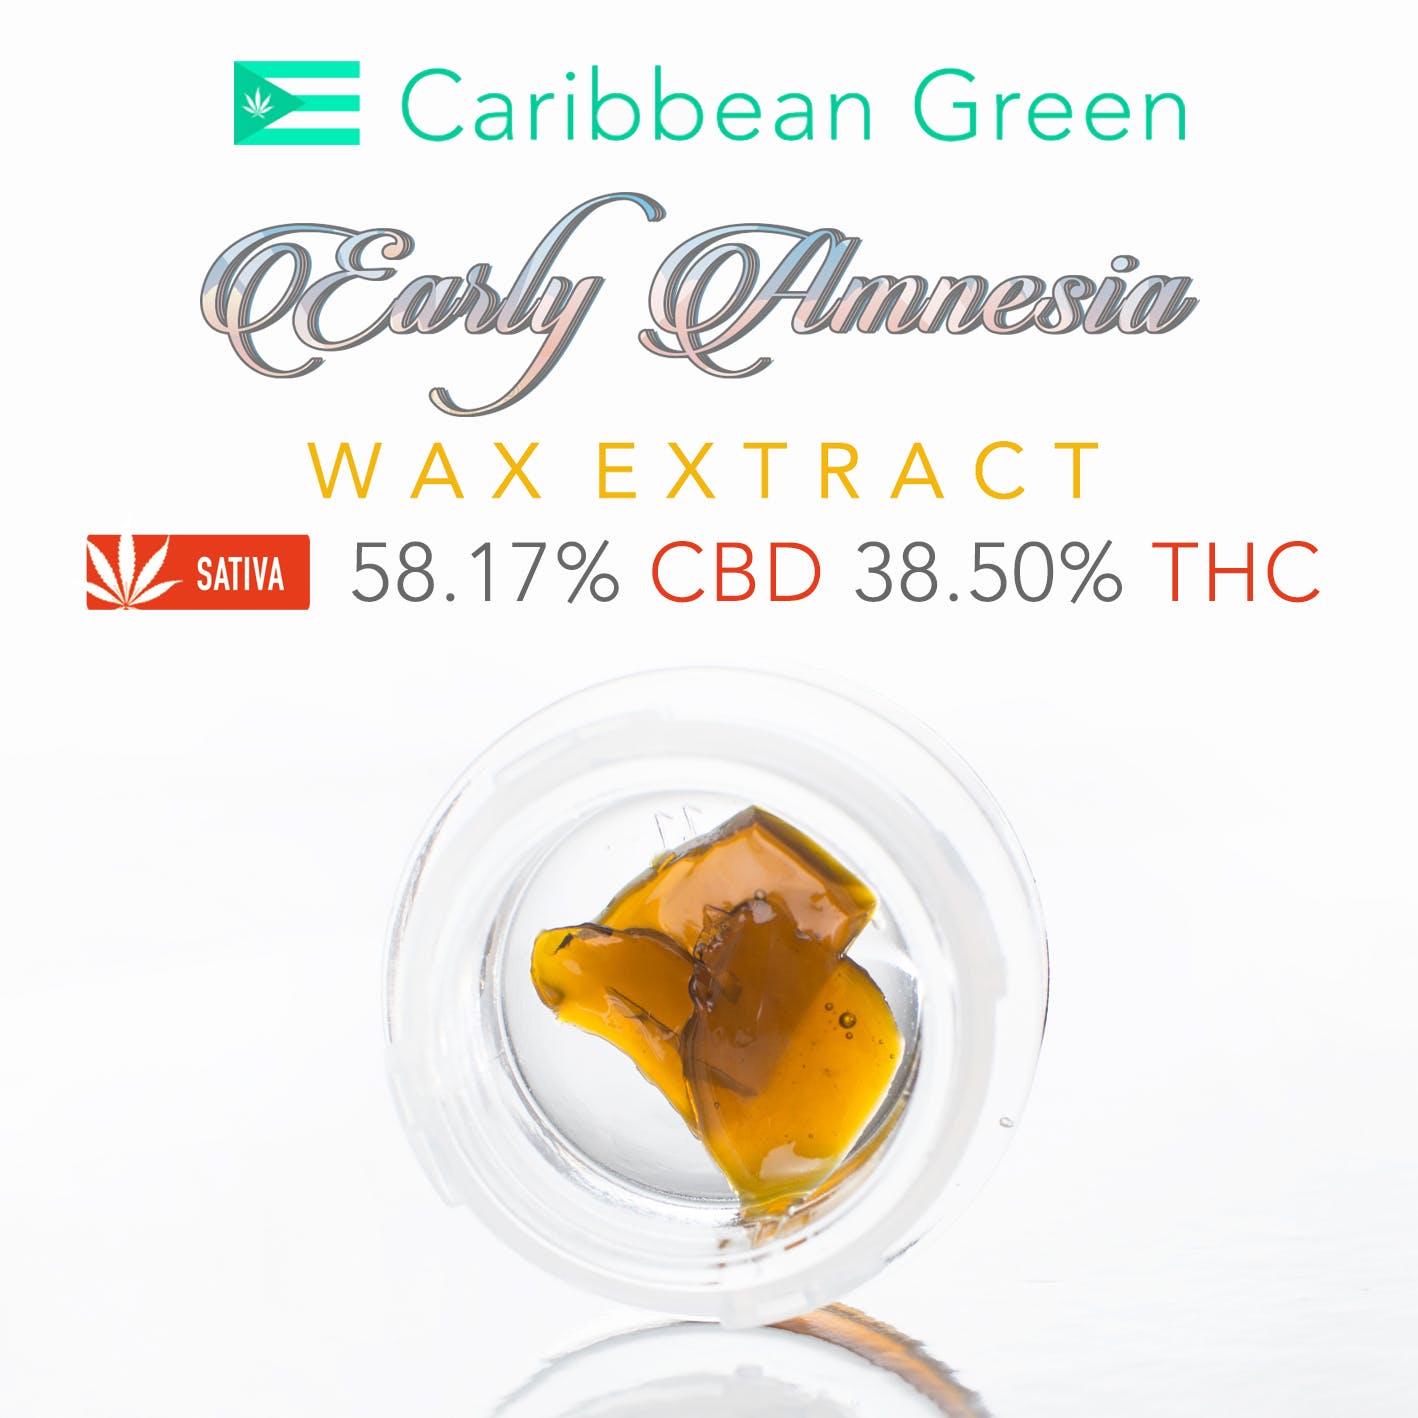 Early Amnesia Wax Extract - 58.17% CBD, 38.50% THC